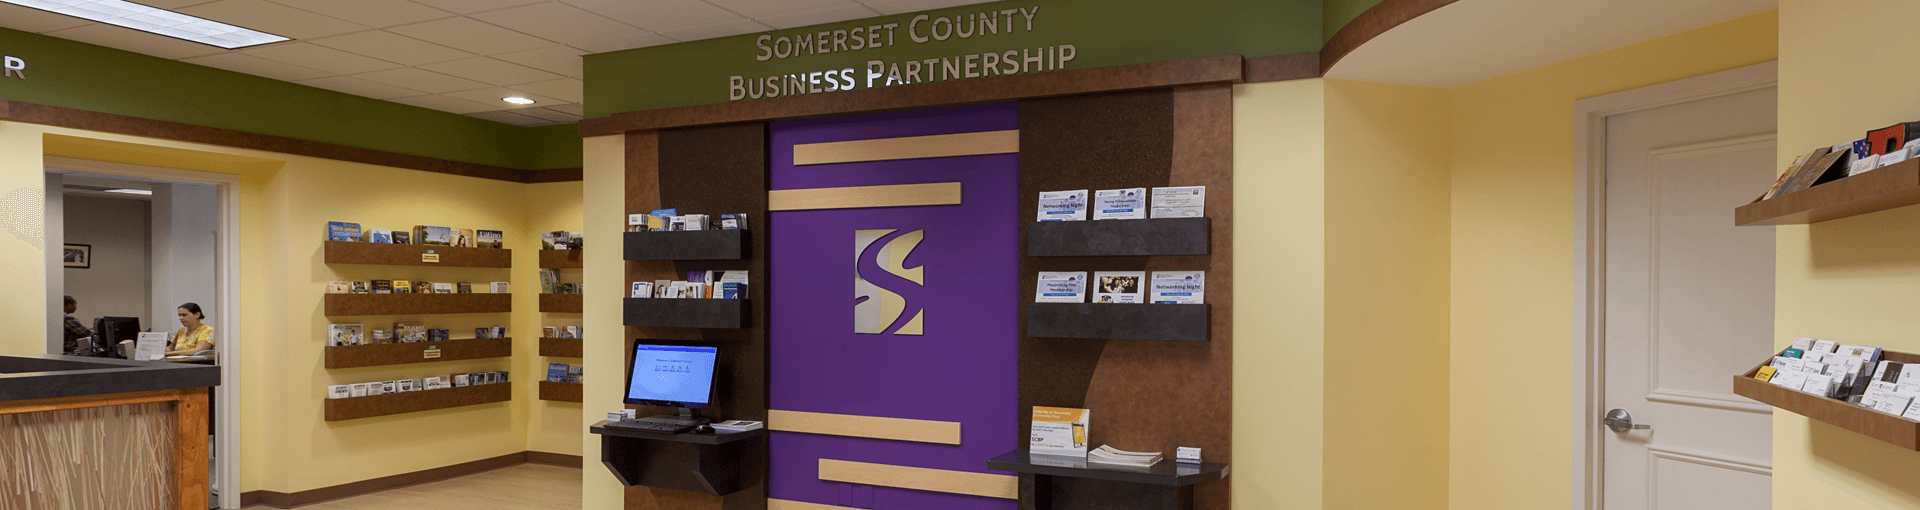 Somerset County Business Partnership